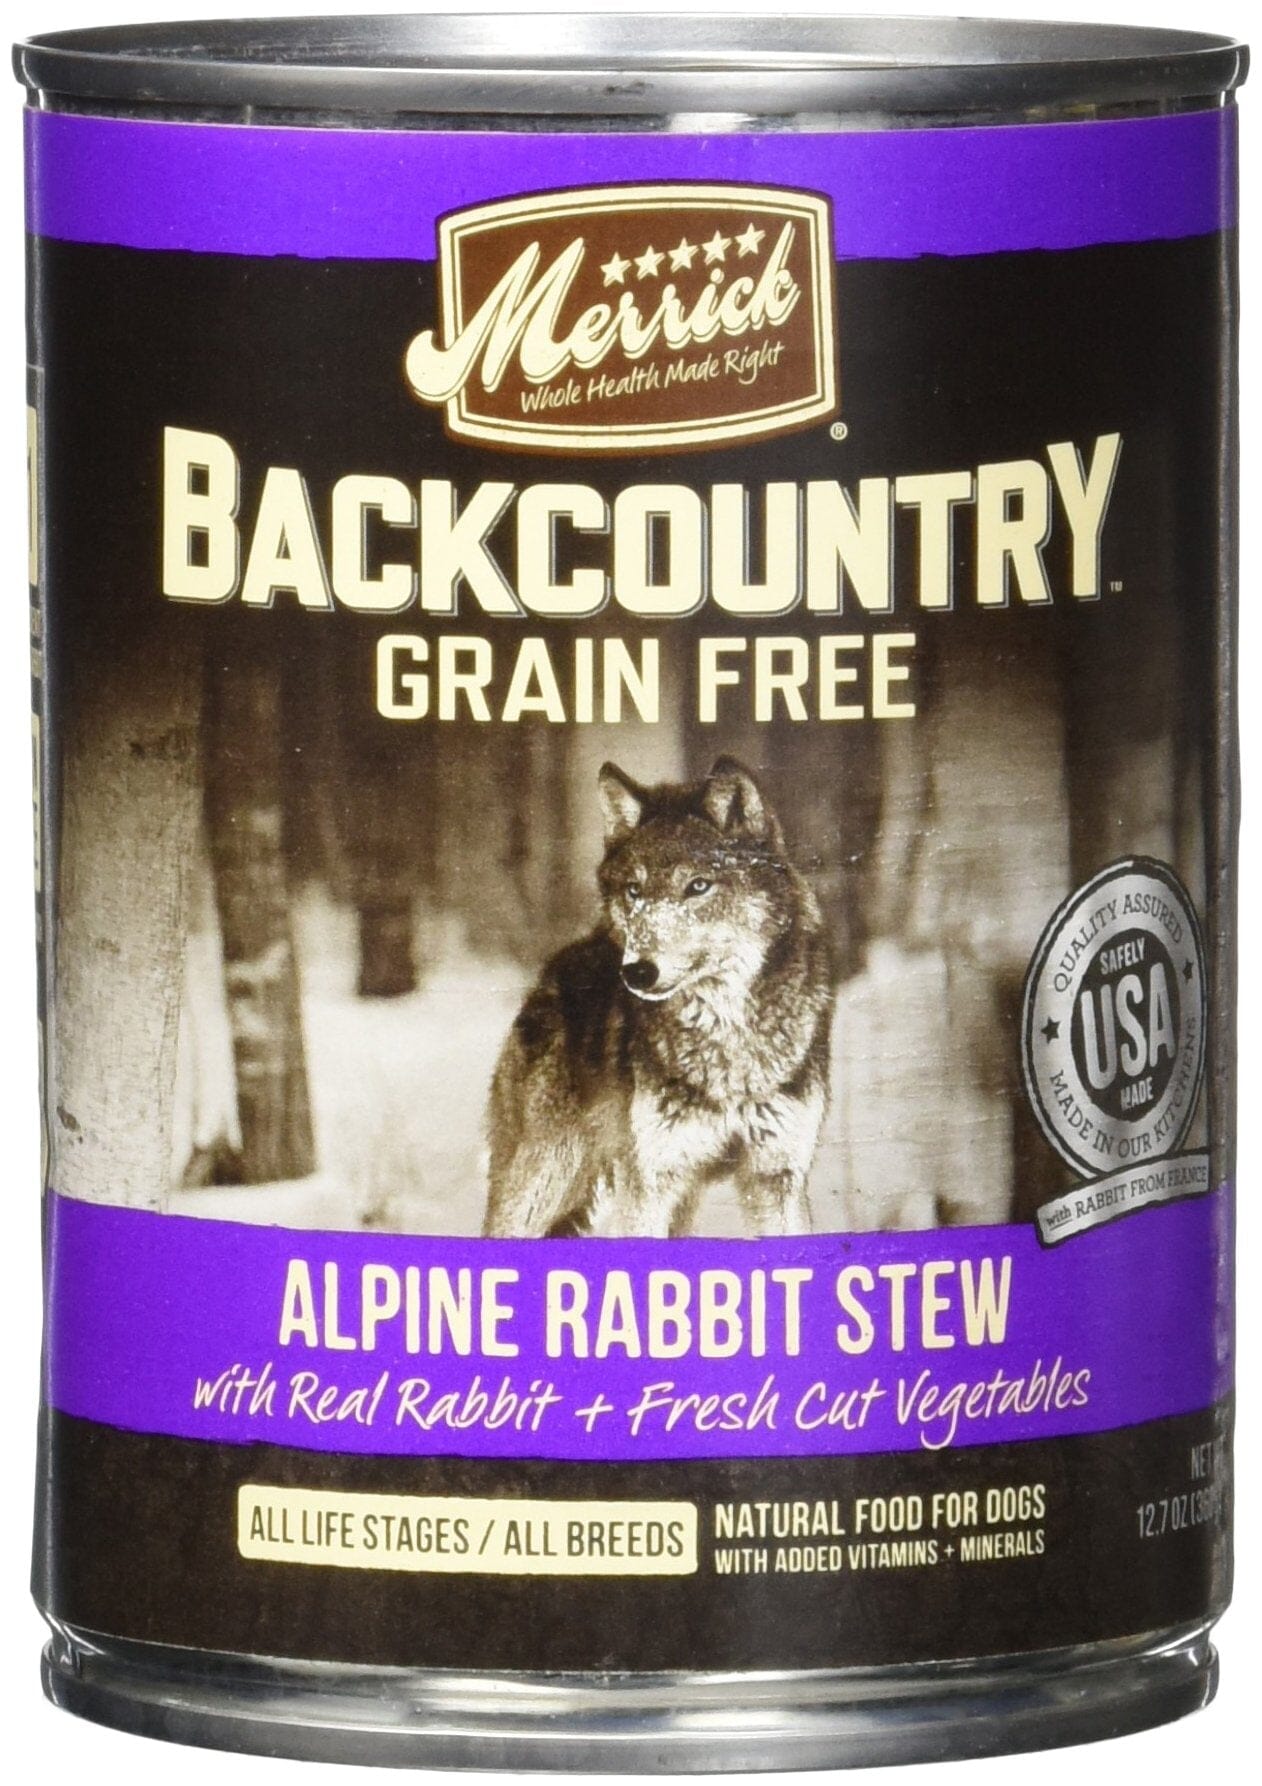 Merrick Backcounty Grain-Free Alpine Rabbit Stew Canned Dog Food - 12.7 Oz - Case of 12  